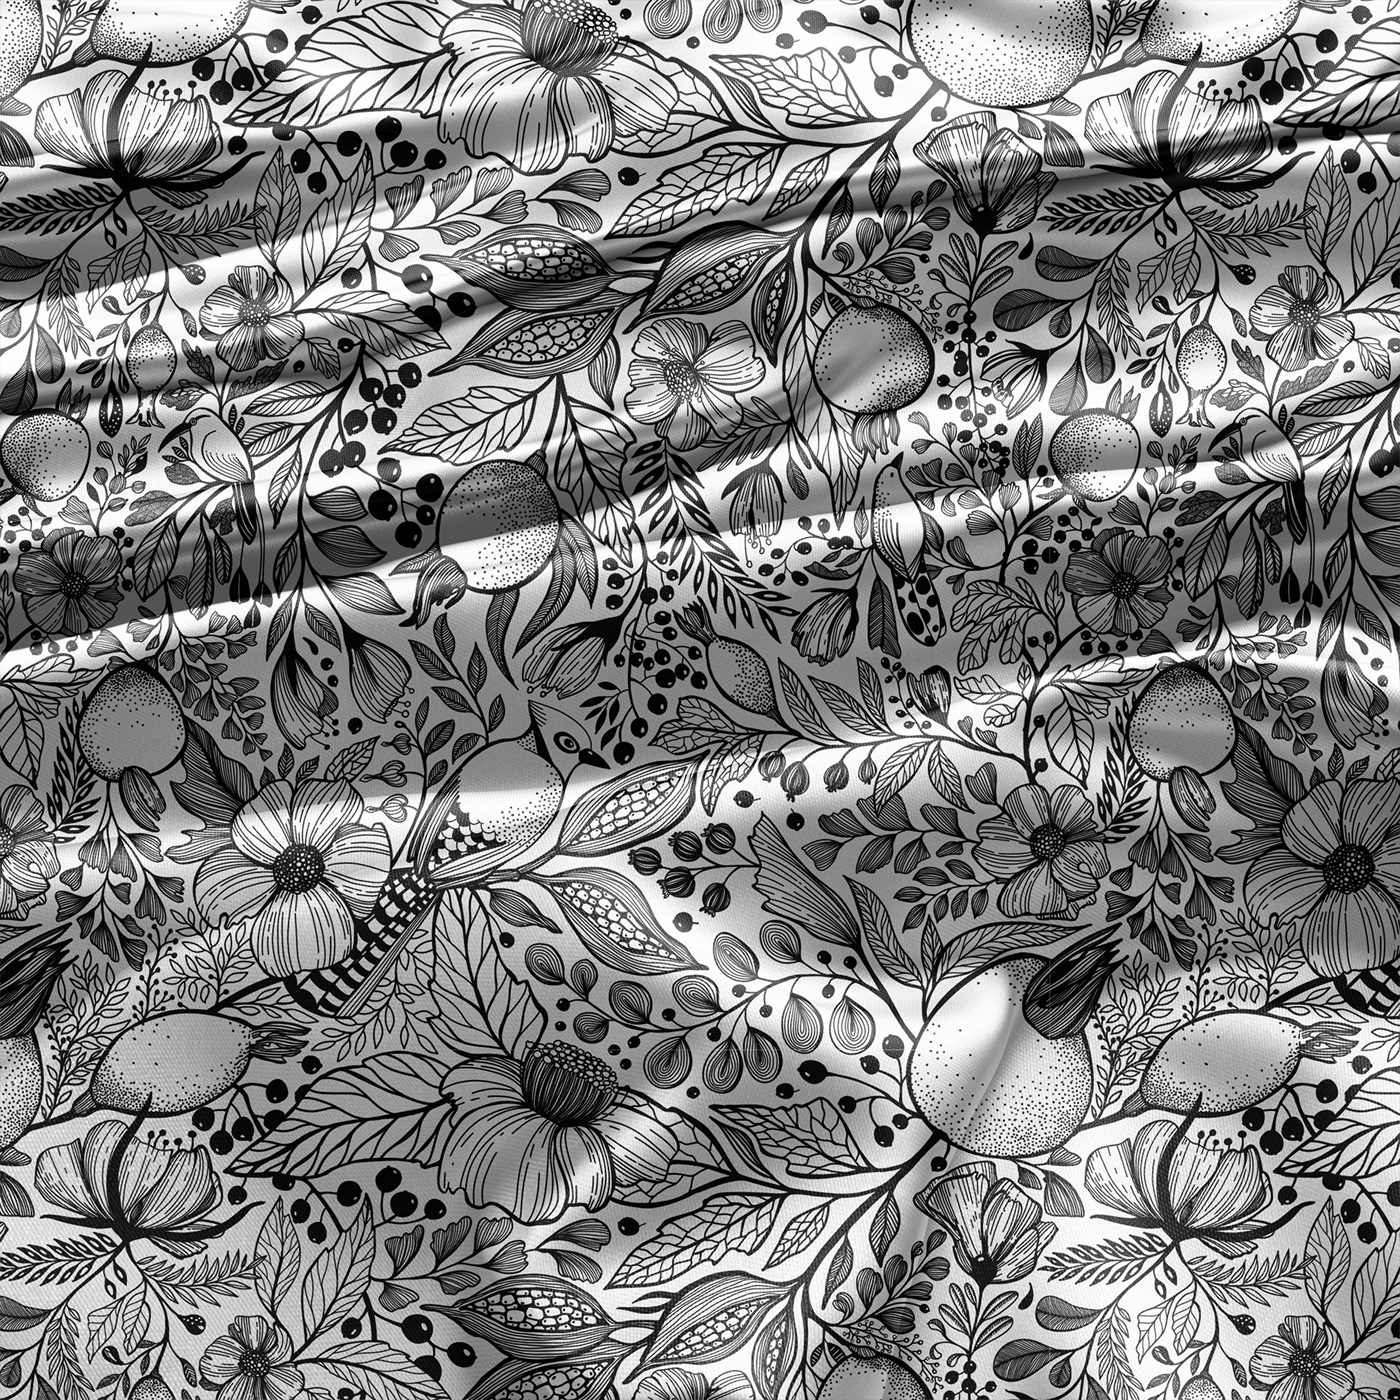 Flowers Nature birds Fruit black and white Plant floral textile print design  nature illustration